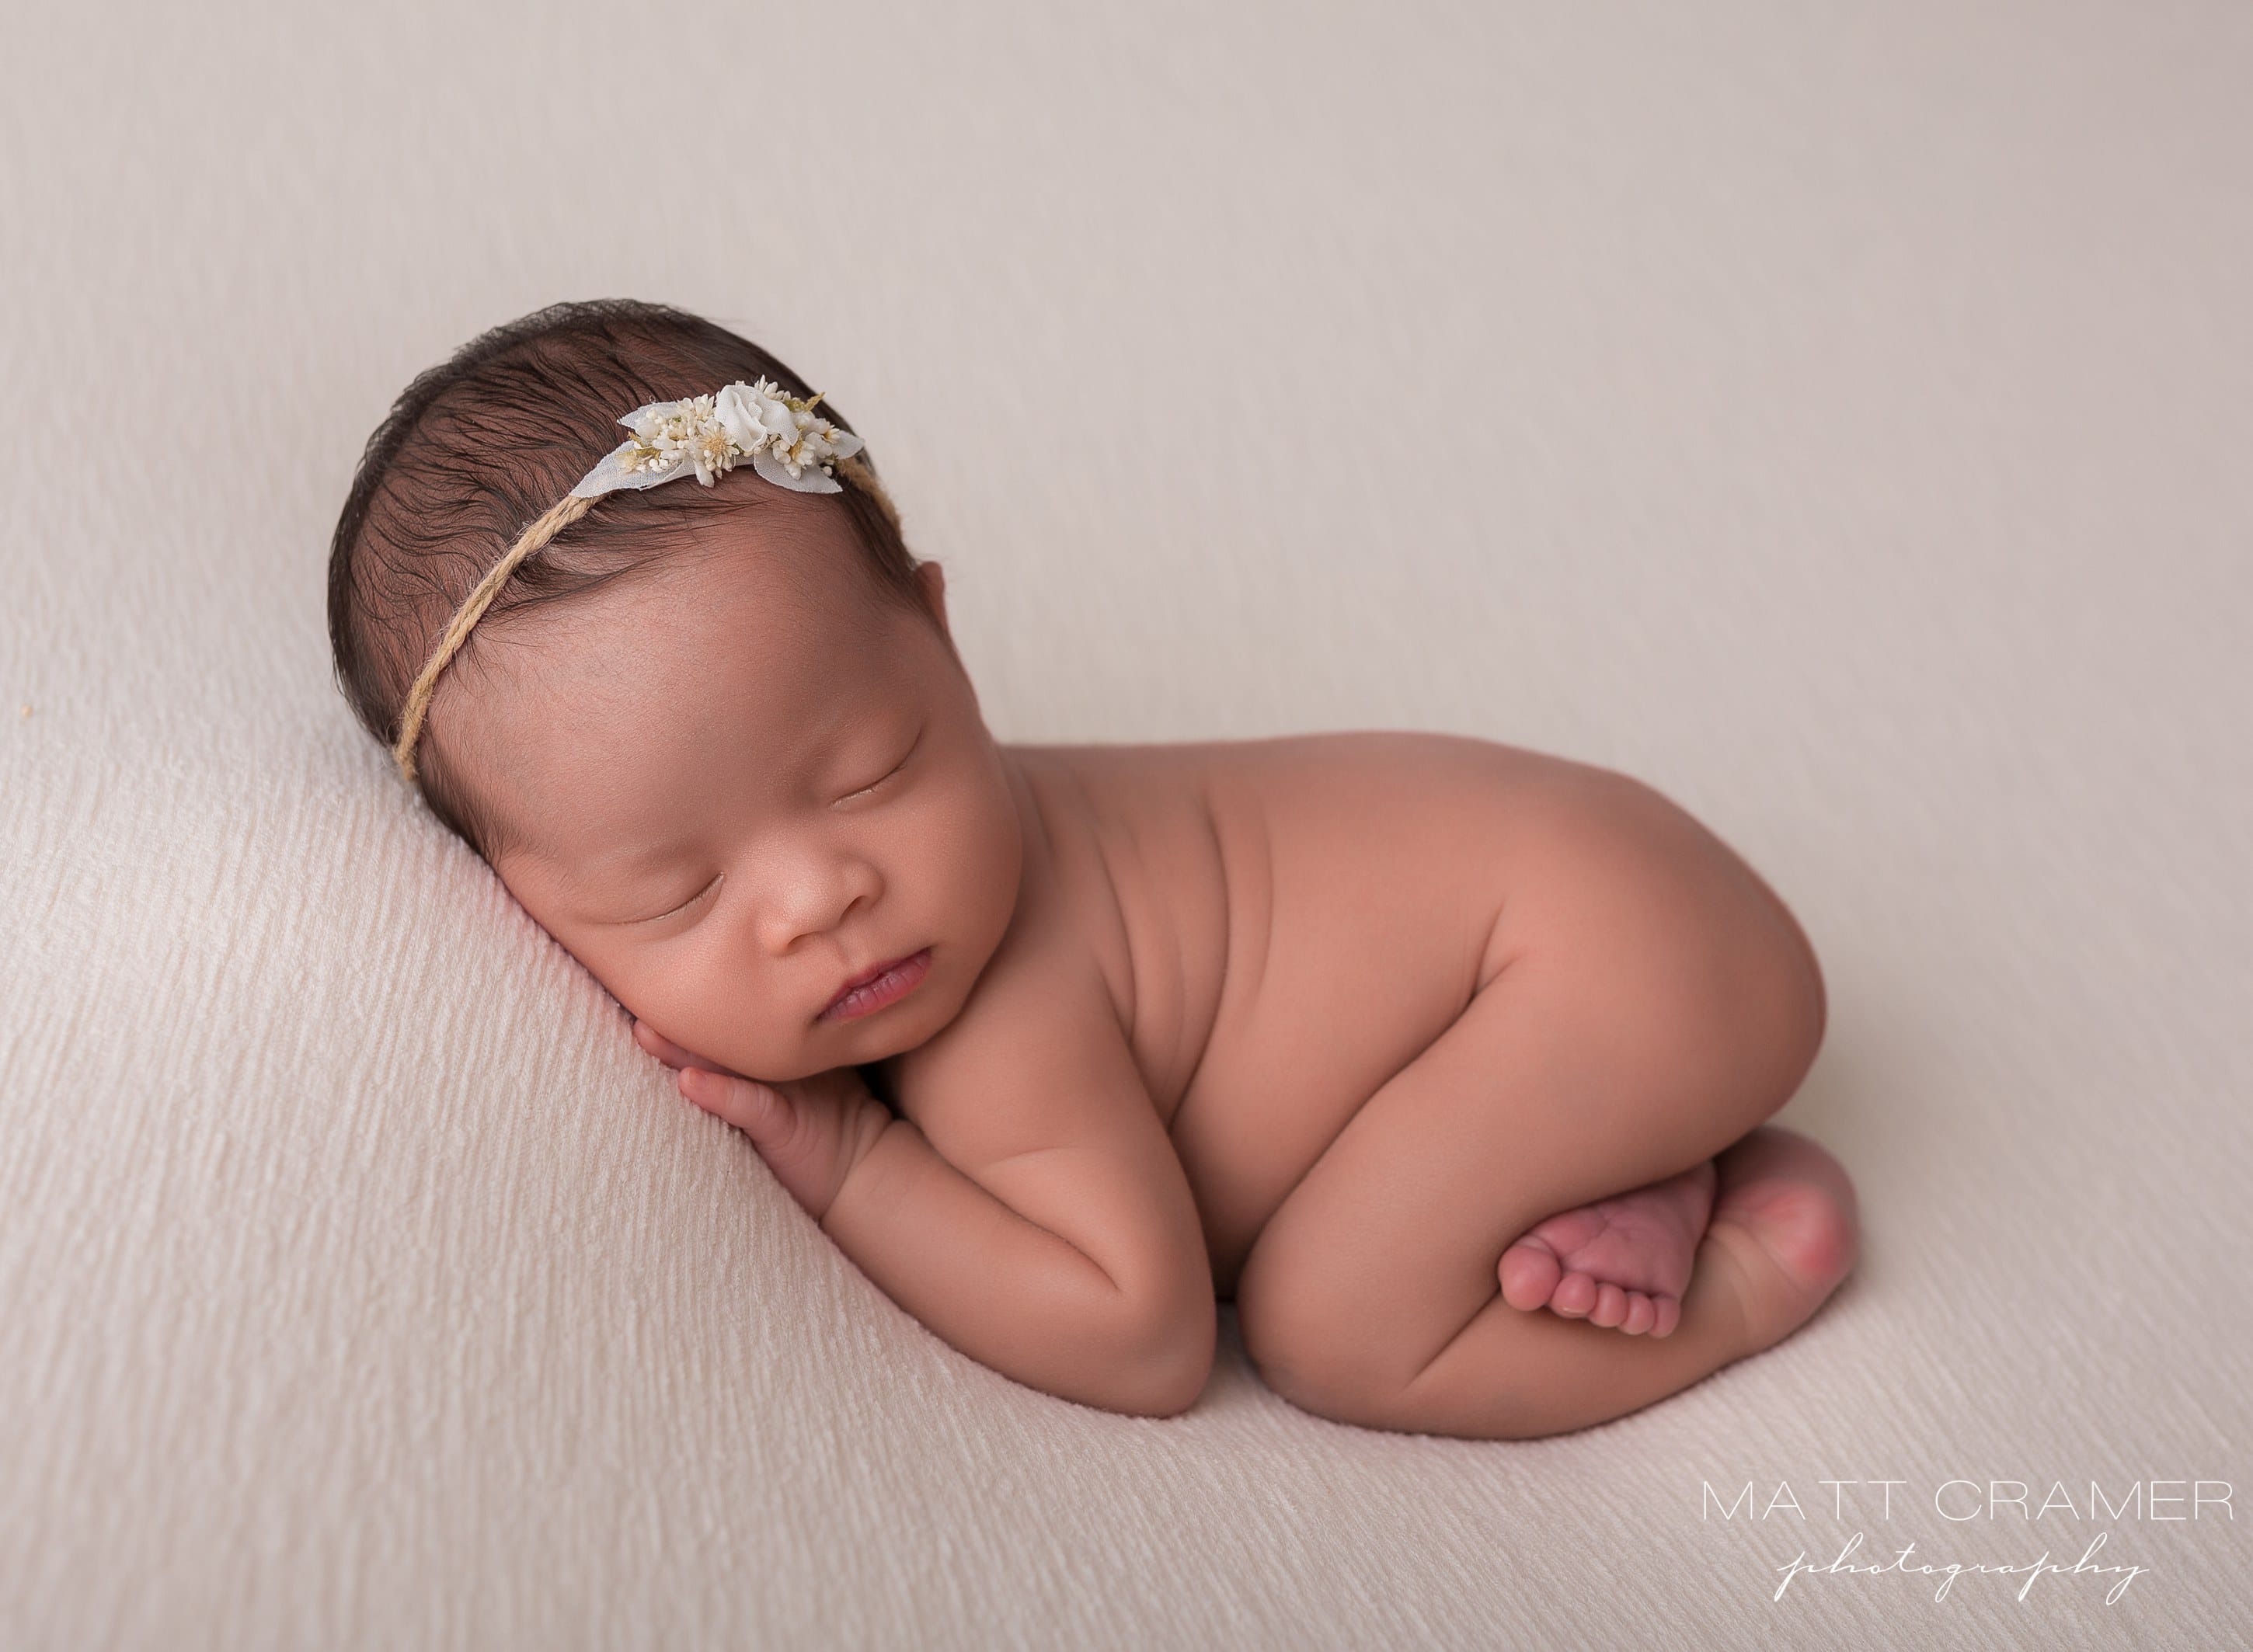 baby girl posed on cream fabric in professional newborn photography photoshoot